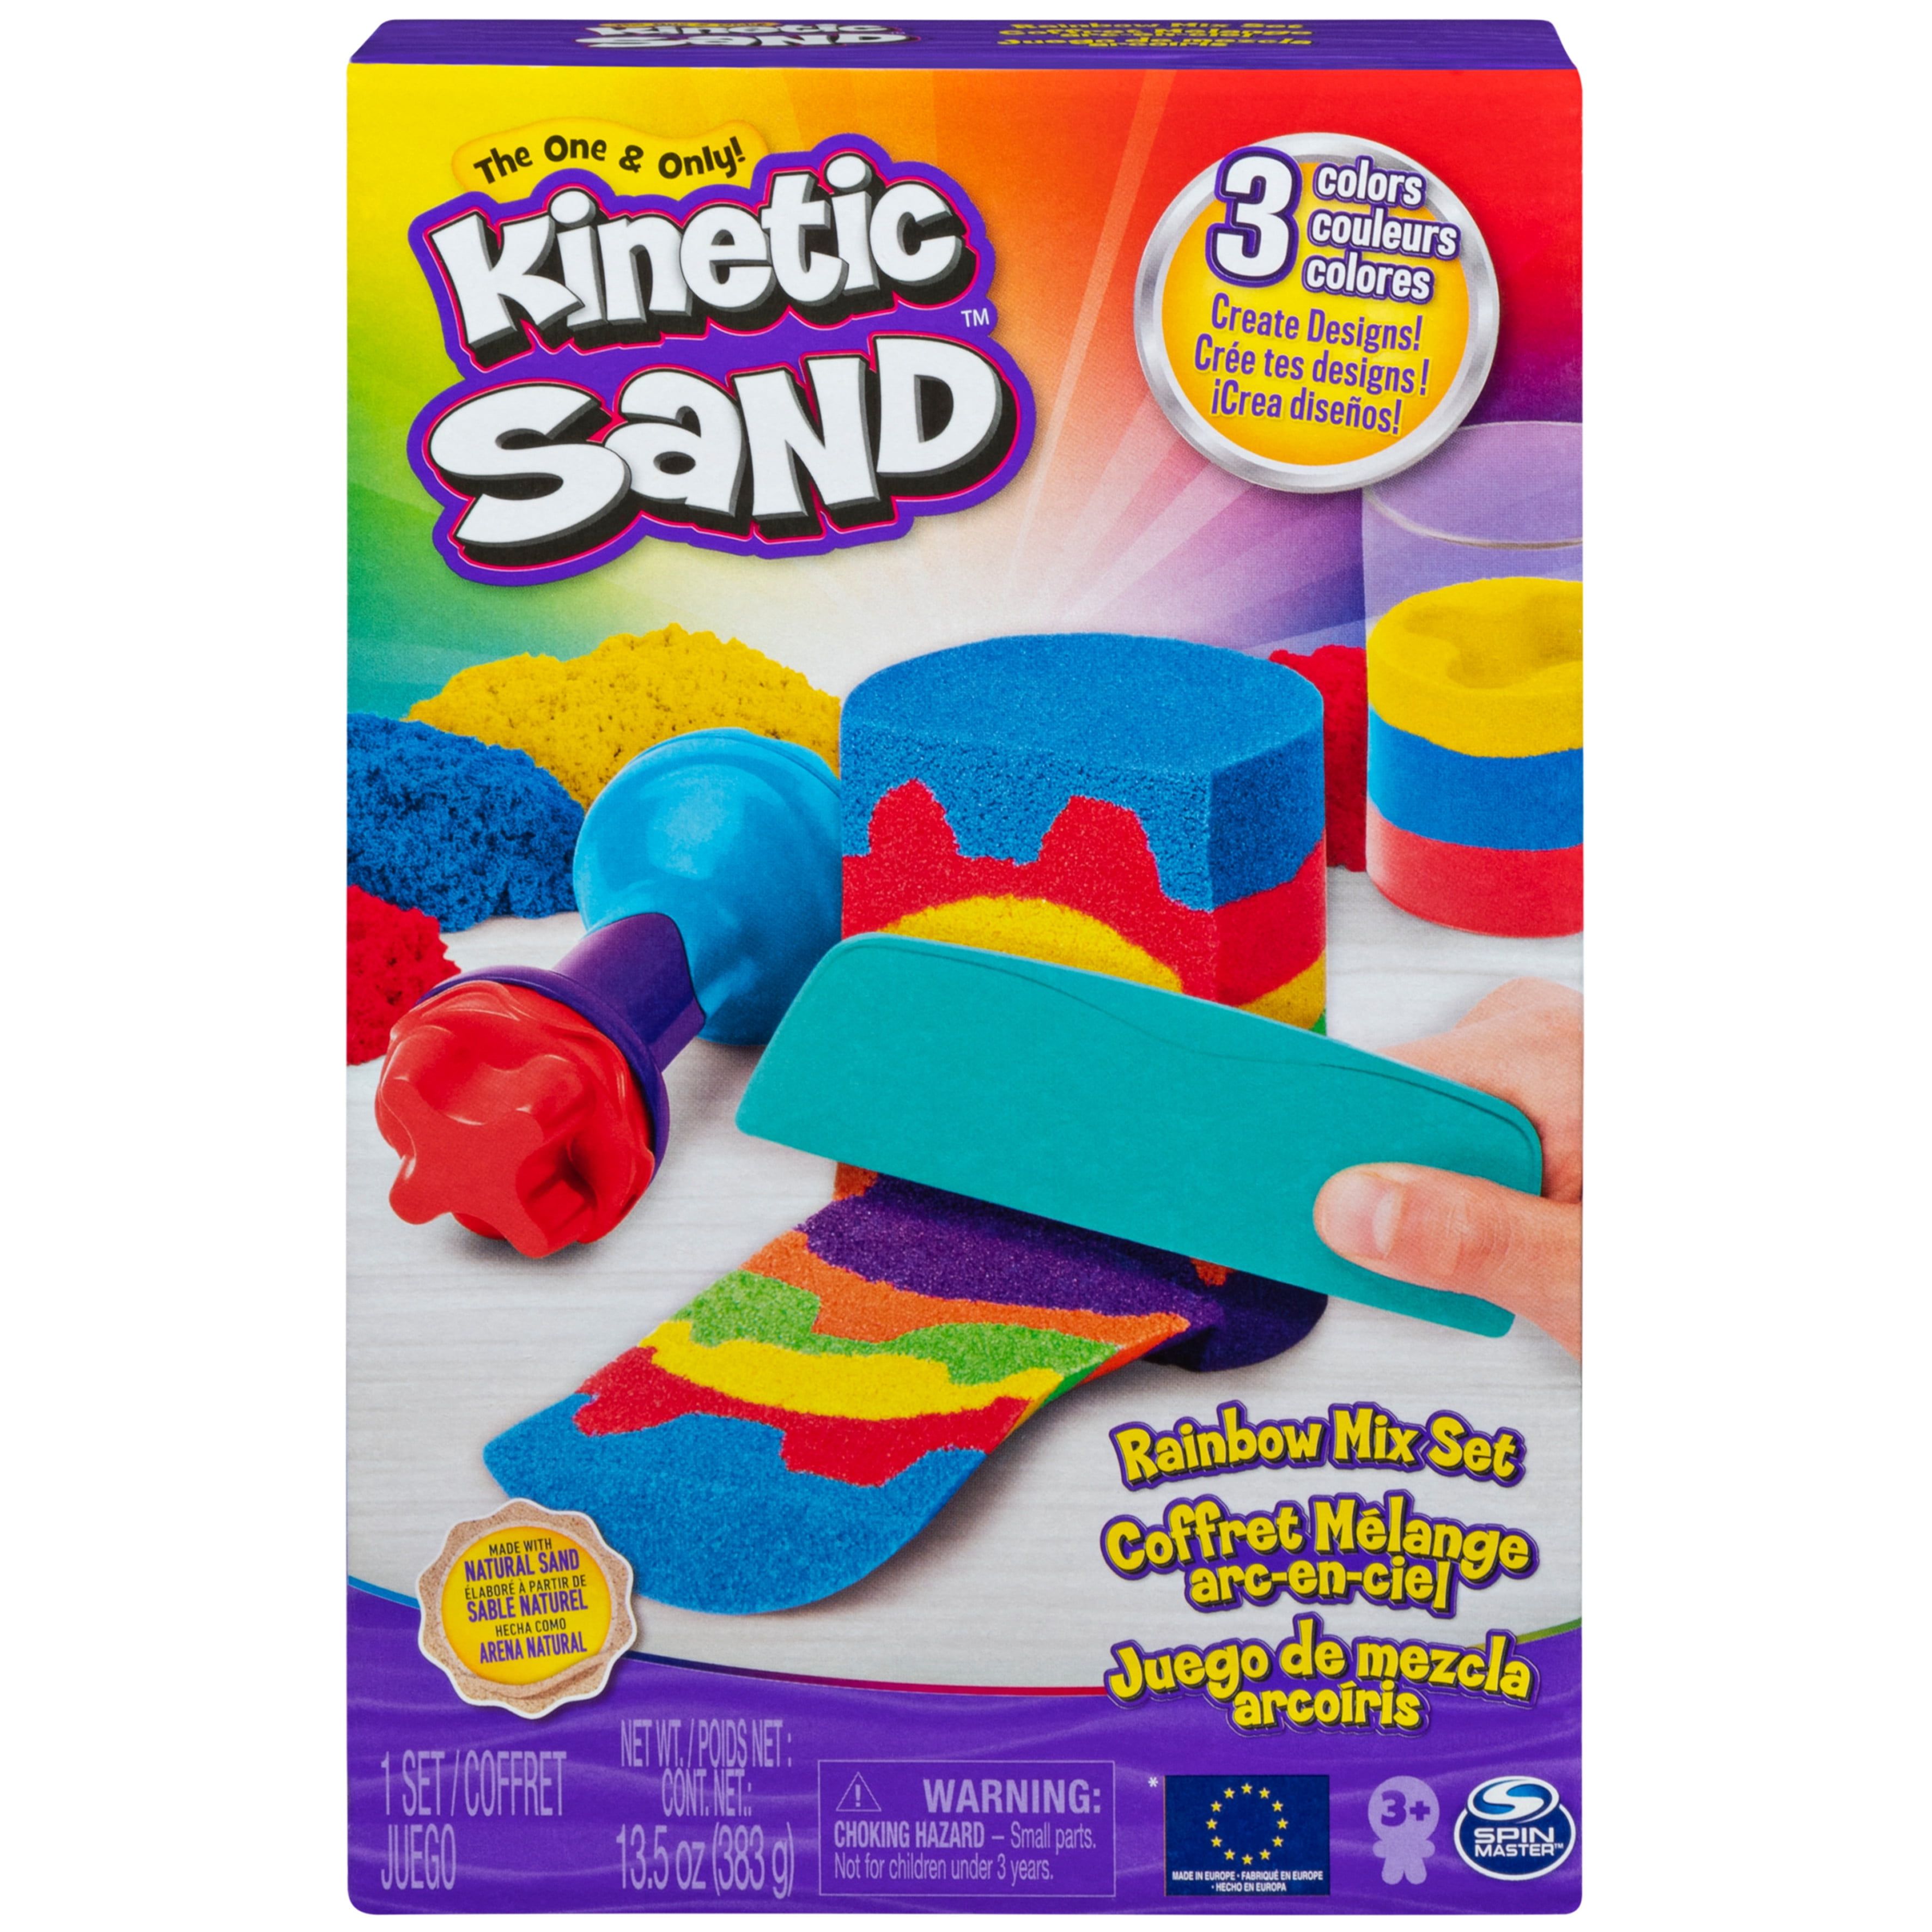 Kinetic Sand Rainbow Mix Set, 3 Colors, 3+